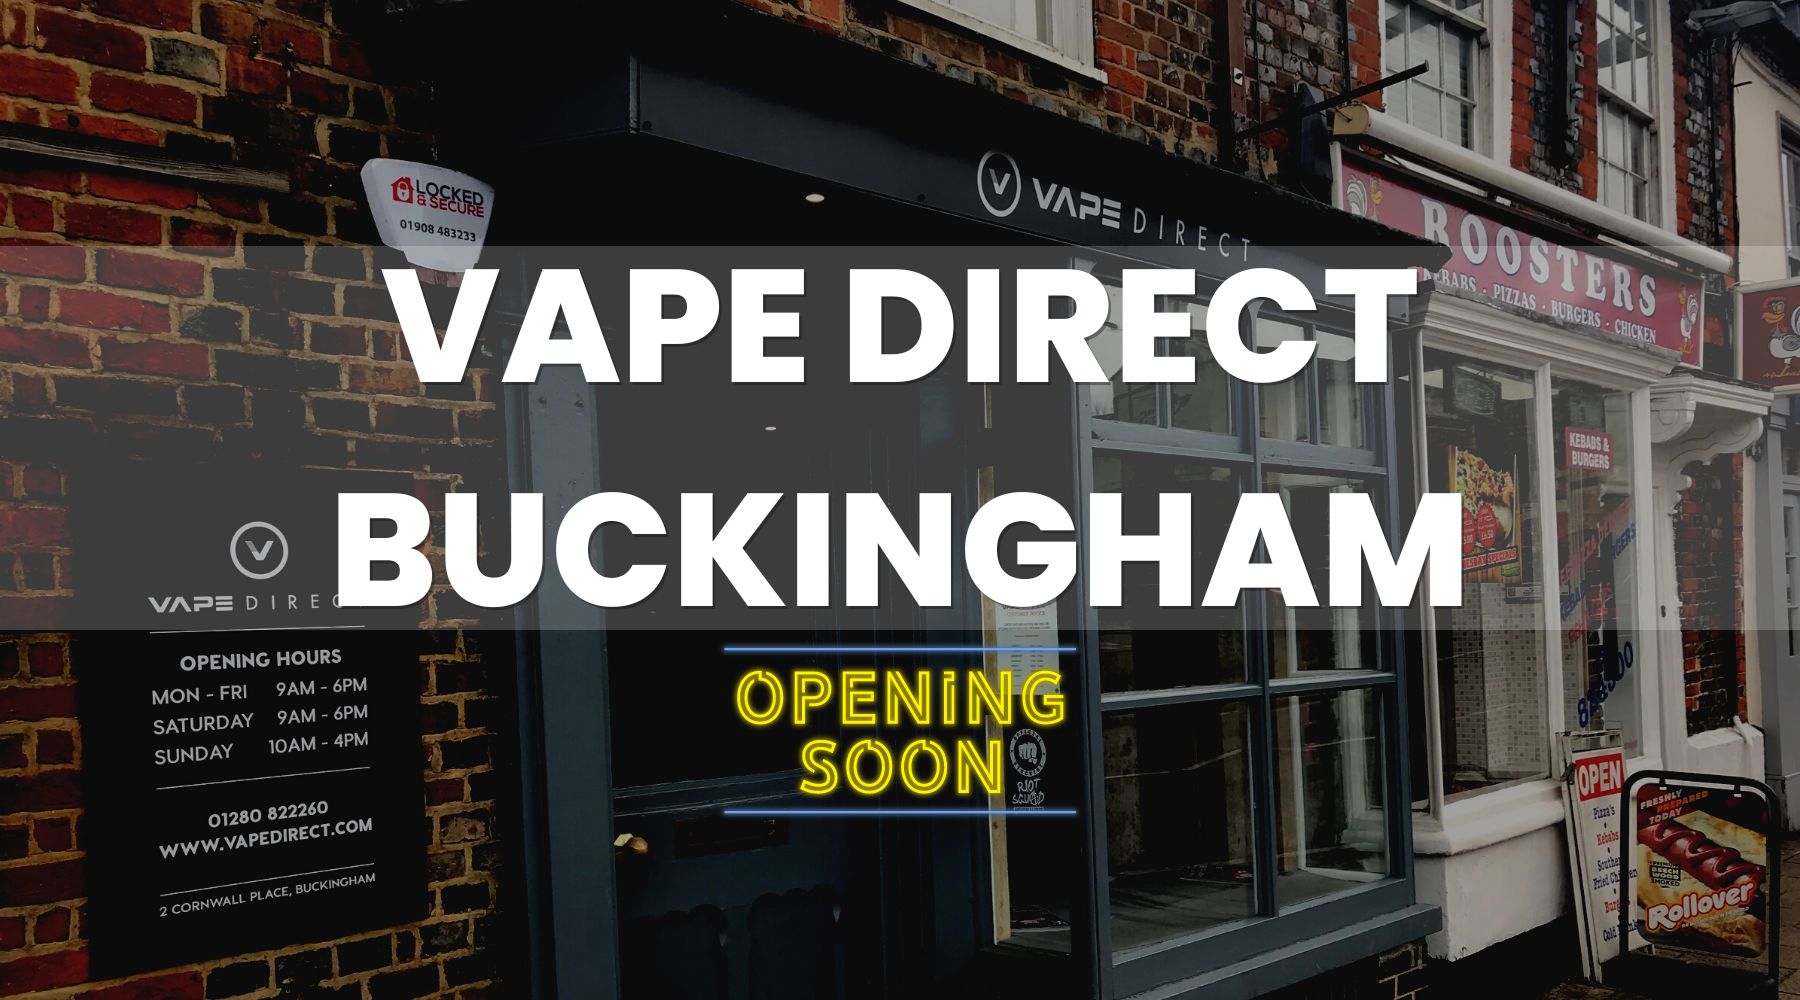 vape-direct-buckingham-opening-soon